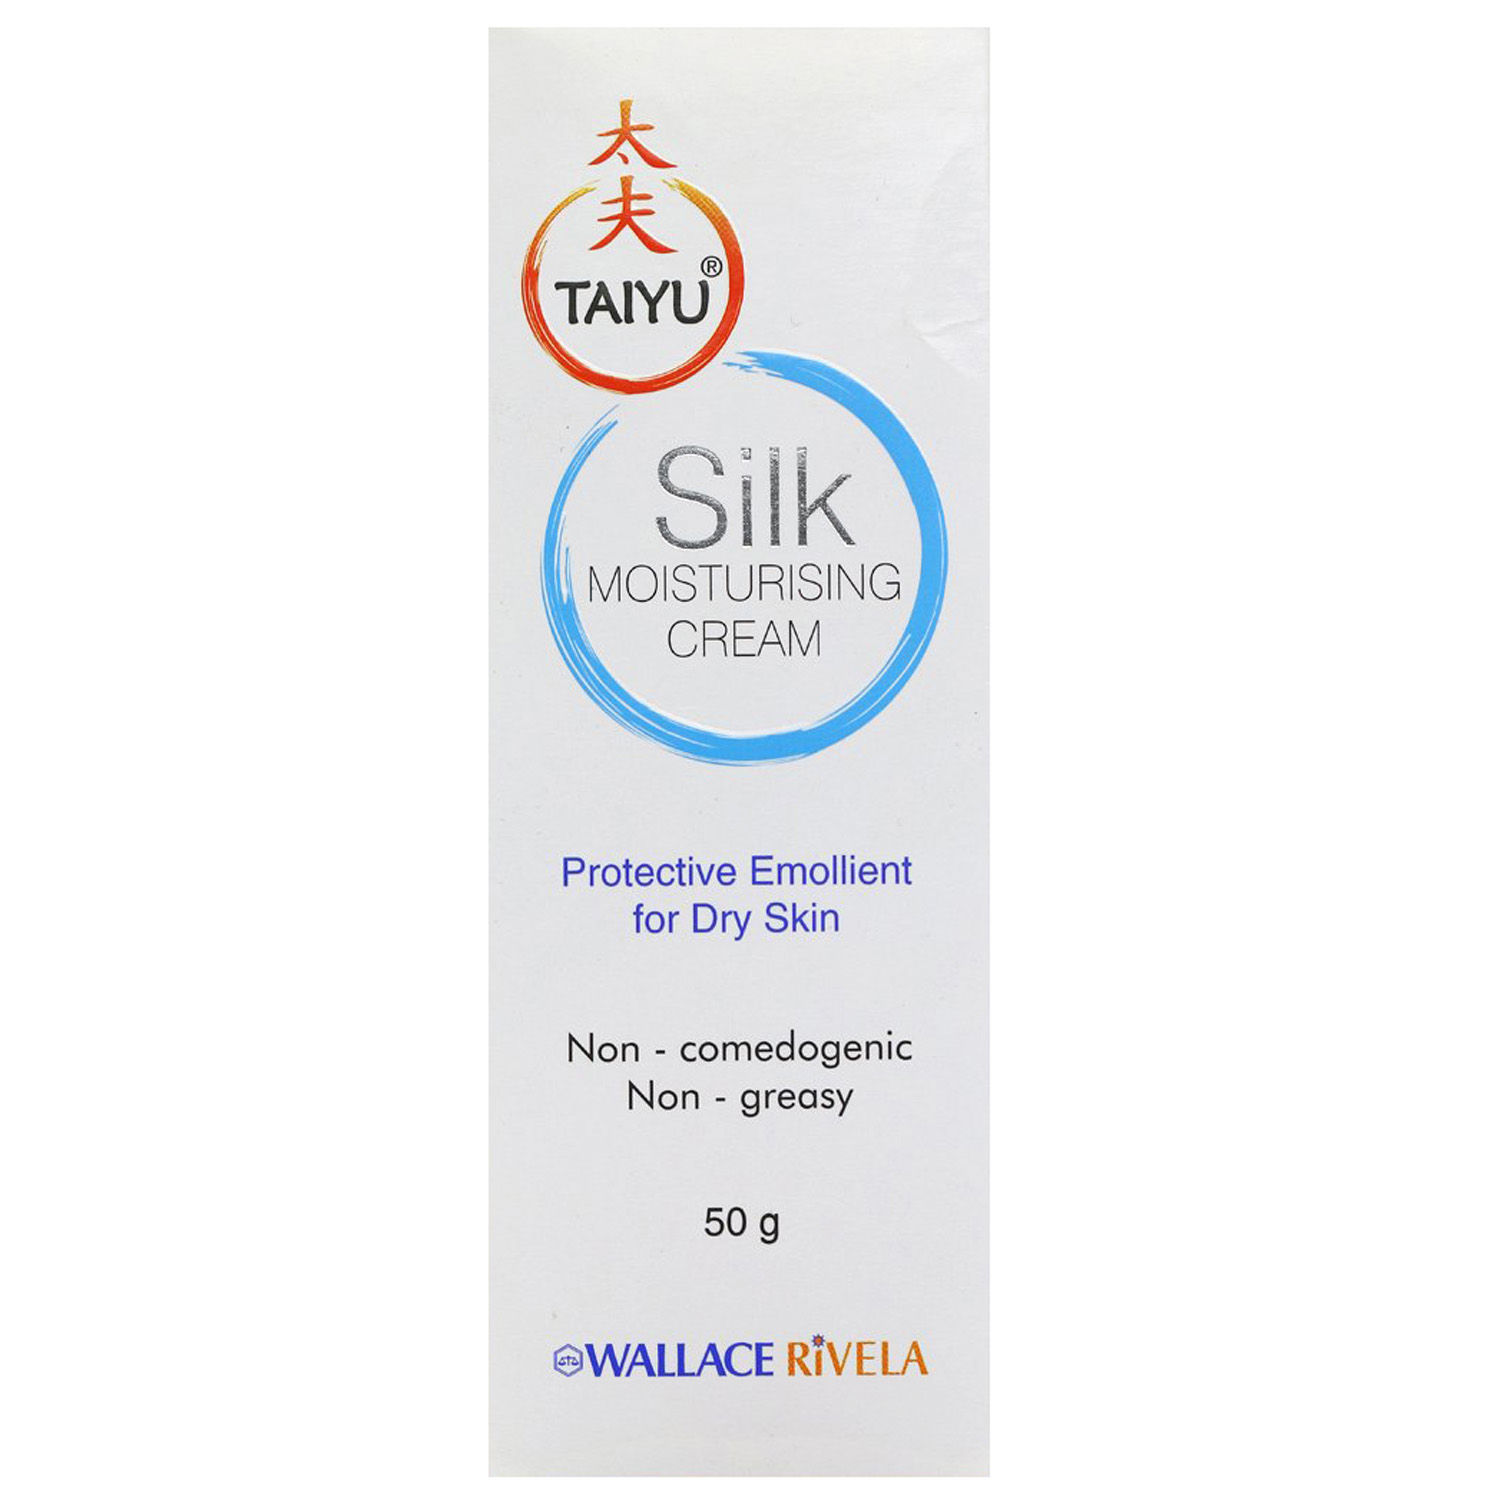 Buy Taiyu Silk Moisturising Cream for Dry Skin, 50 gm Online